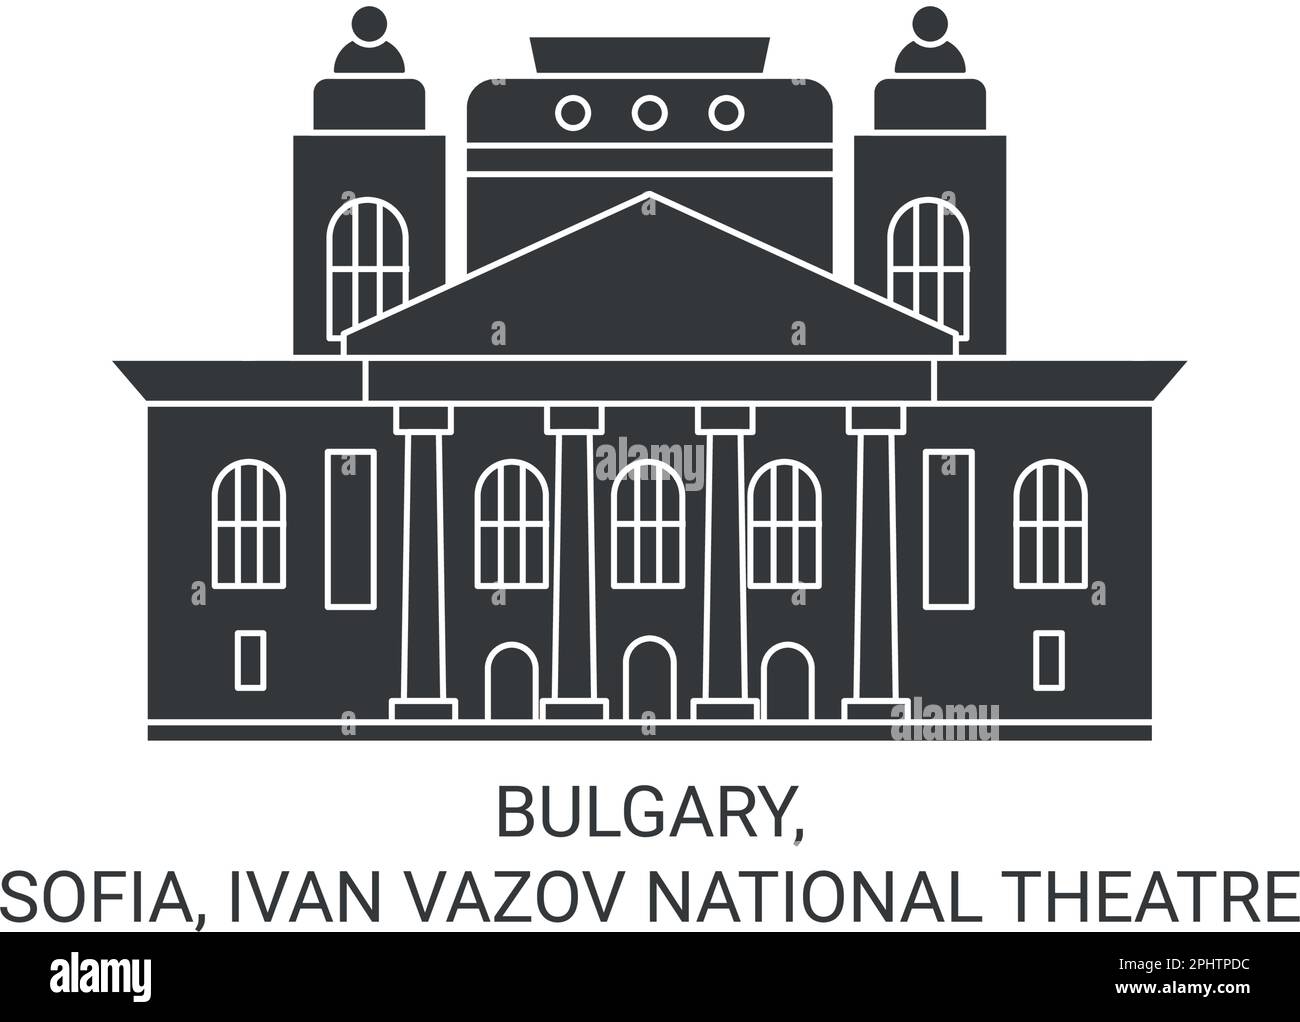 Bulgary, Sofia, Ivan Vazov National Theatre travel landmark vector illustration Stock Vector